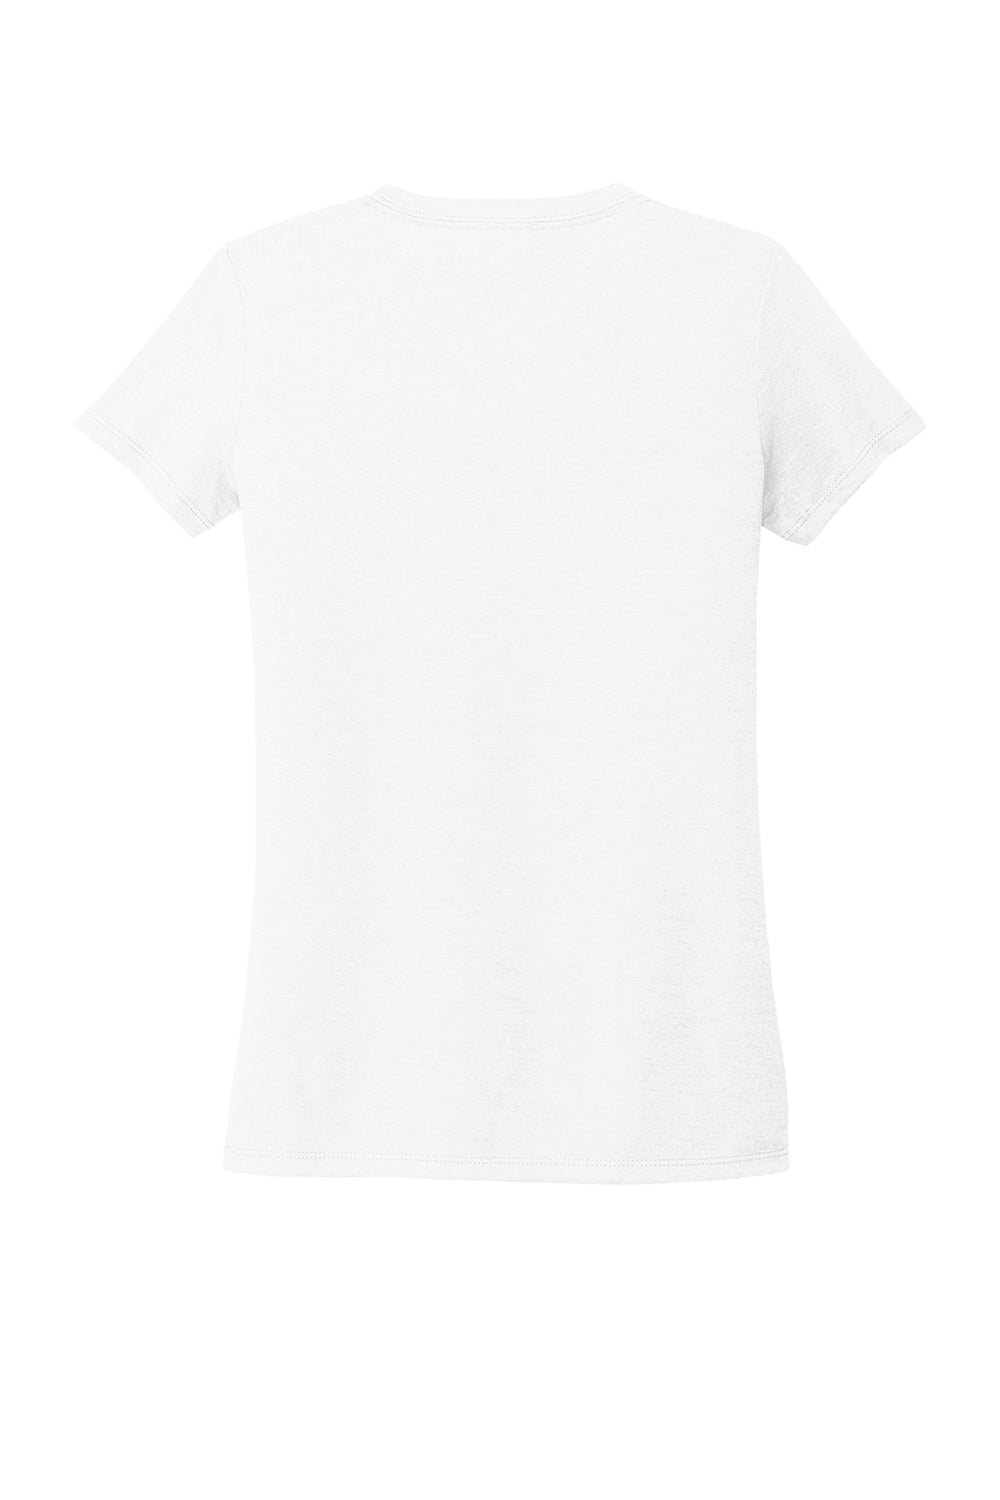 Allmade AL2018 Womens Short Sleeve V-Neck T-Shirt Bright White Flat Back